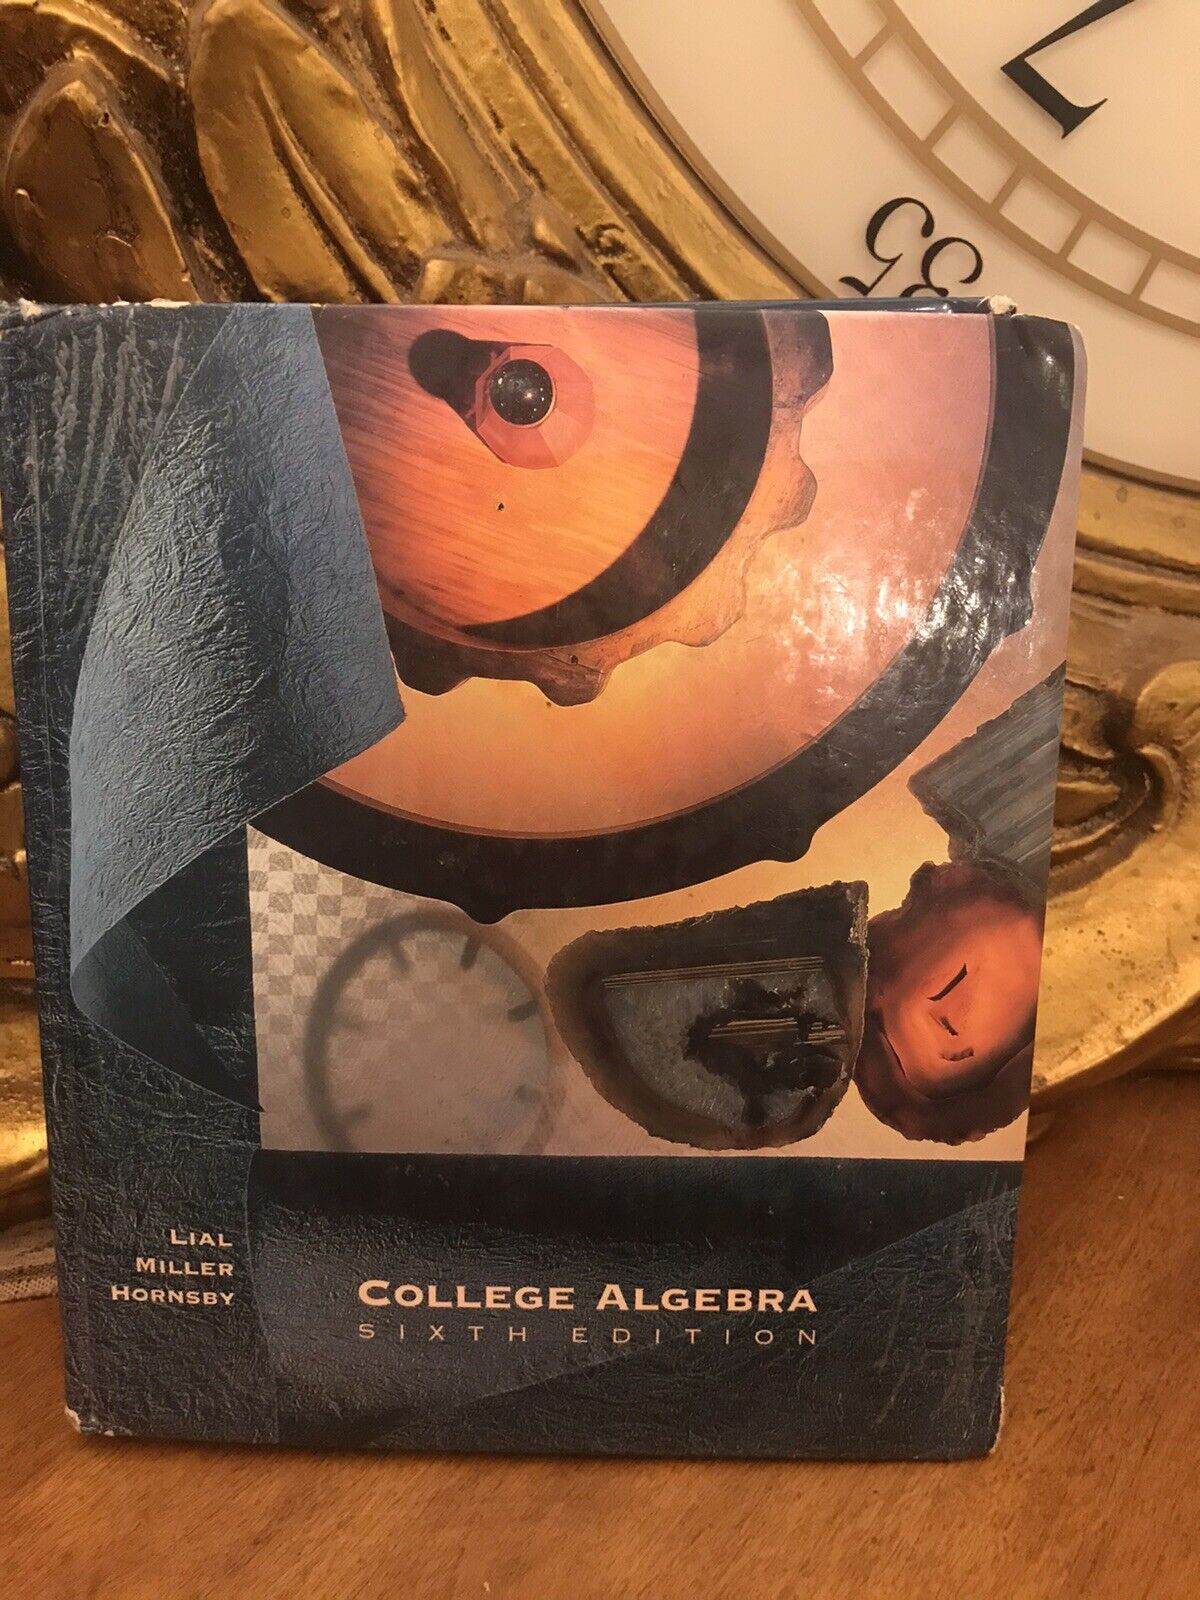 College Algebra 6th edition, John Hornsby, Margaret Lial, Charles Miller 1992 --